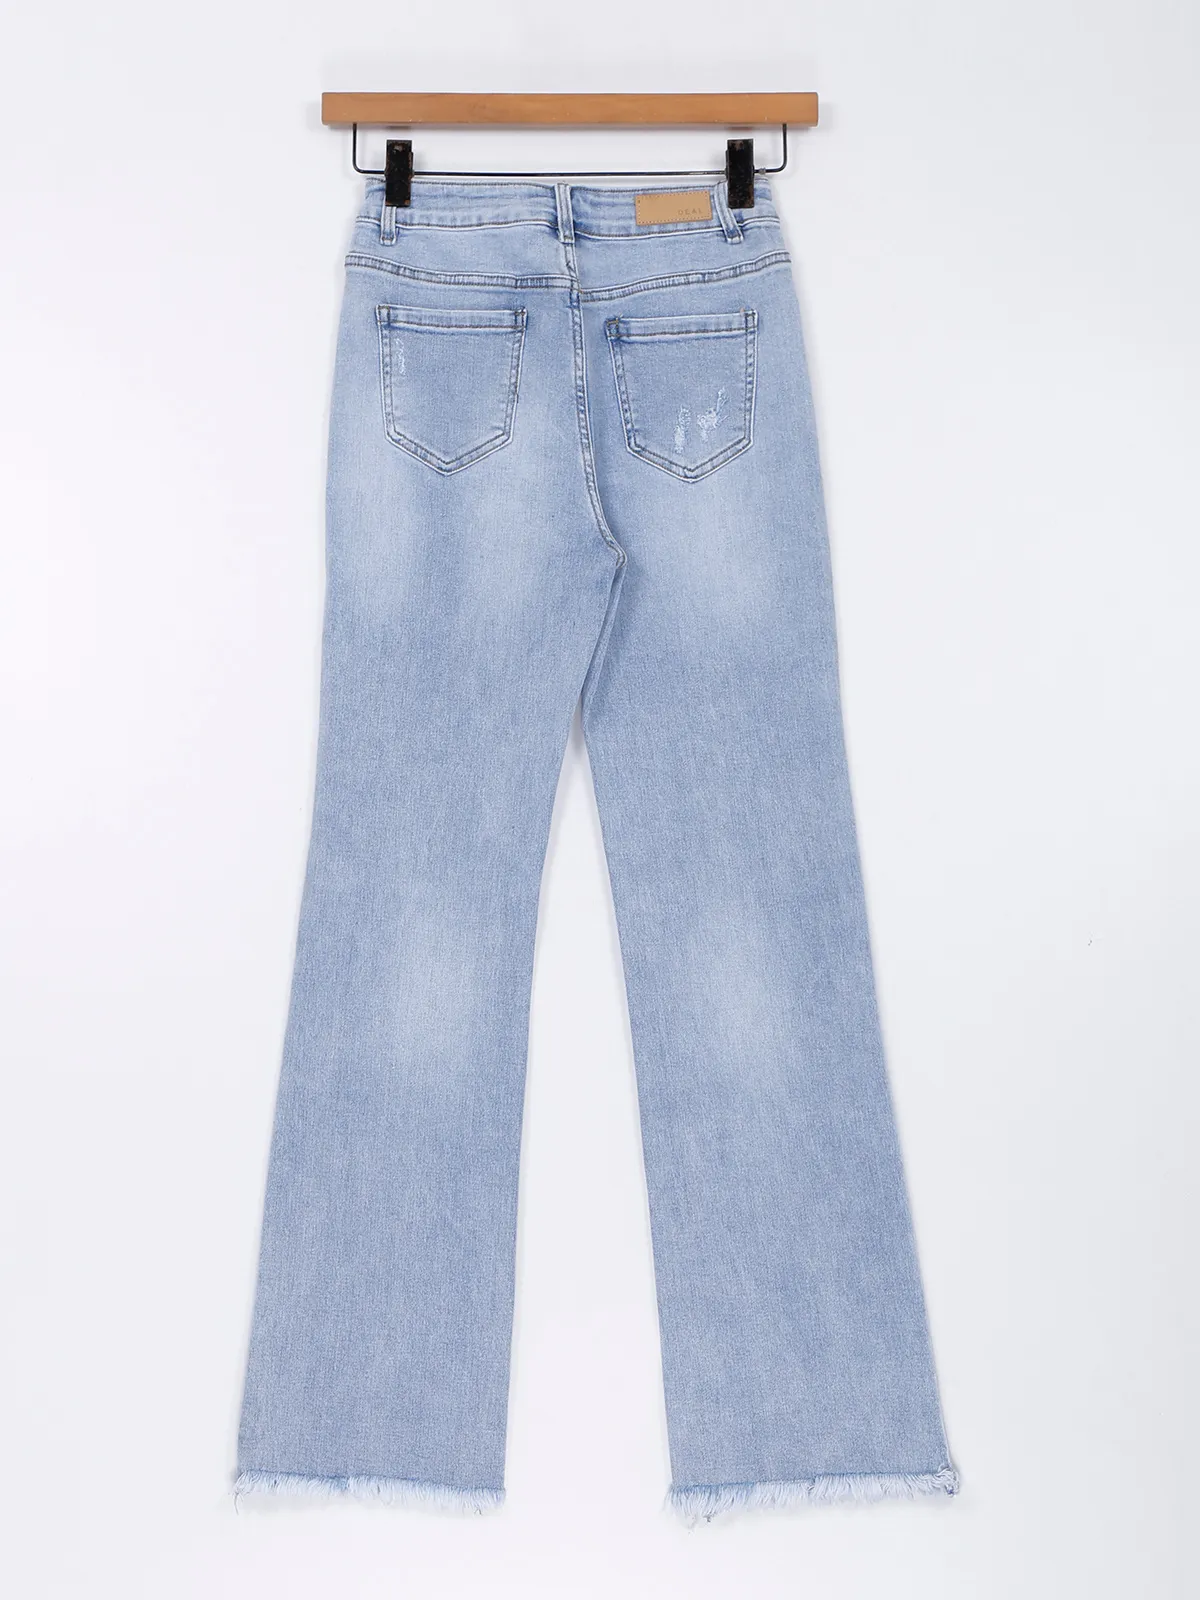 Deal light blue straight jeans